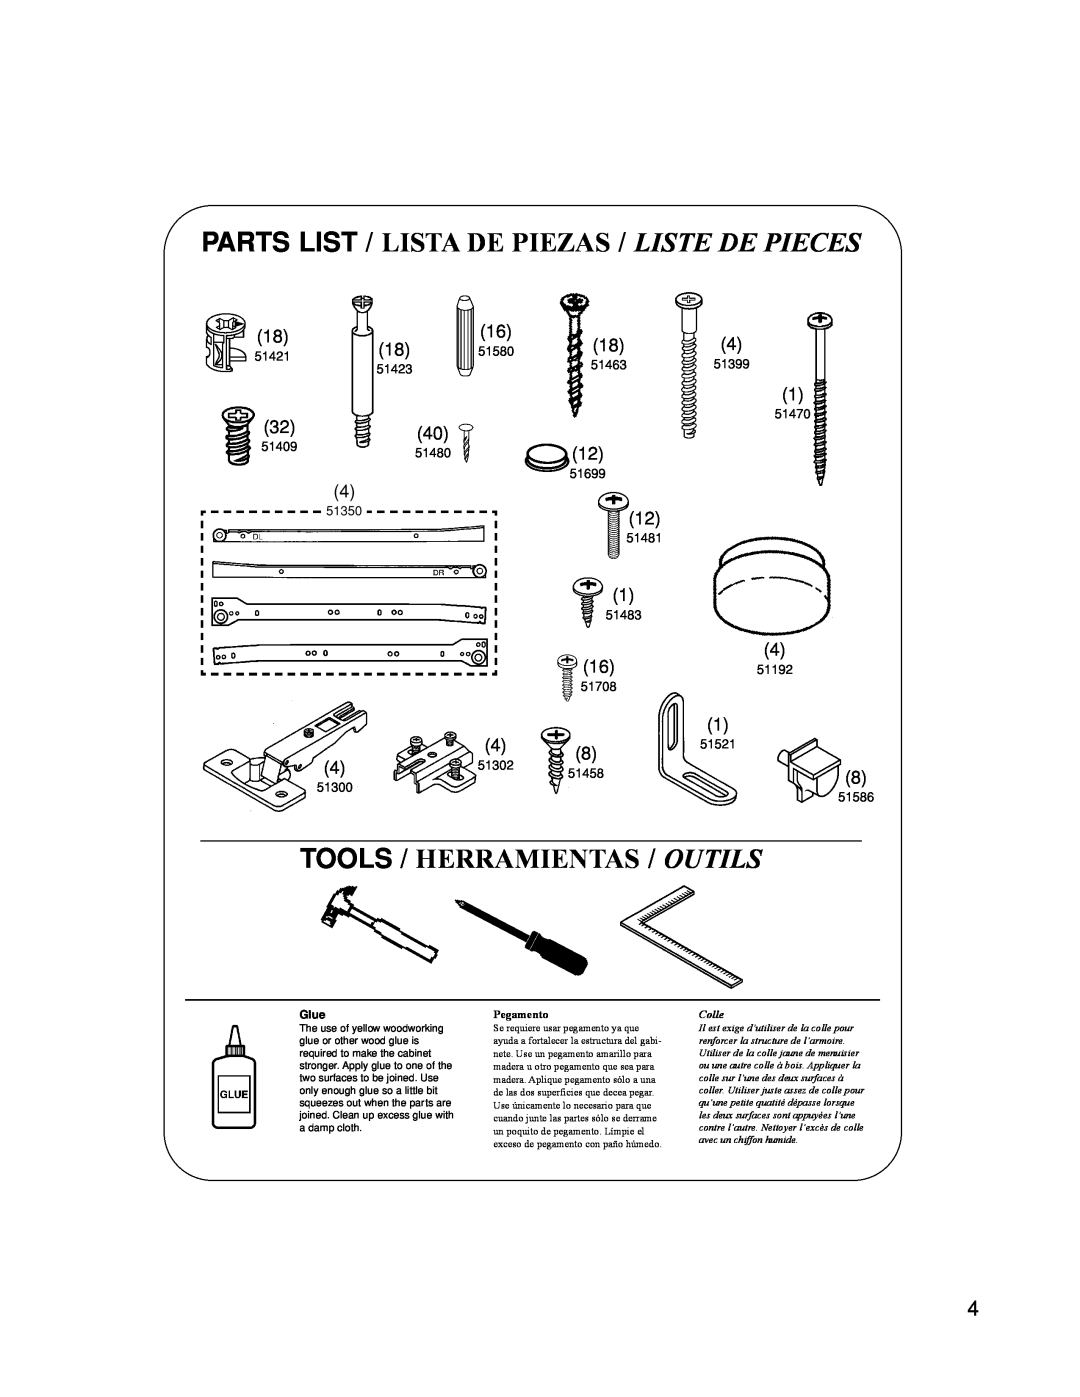 Closet Maid 12307 manual Tools / Herramientas / Outils, Parts List / Lista De Piezas / Liste De Pieces, Glue 